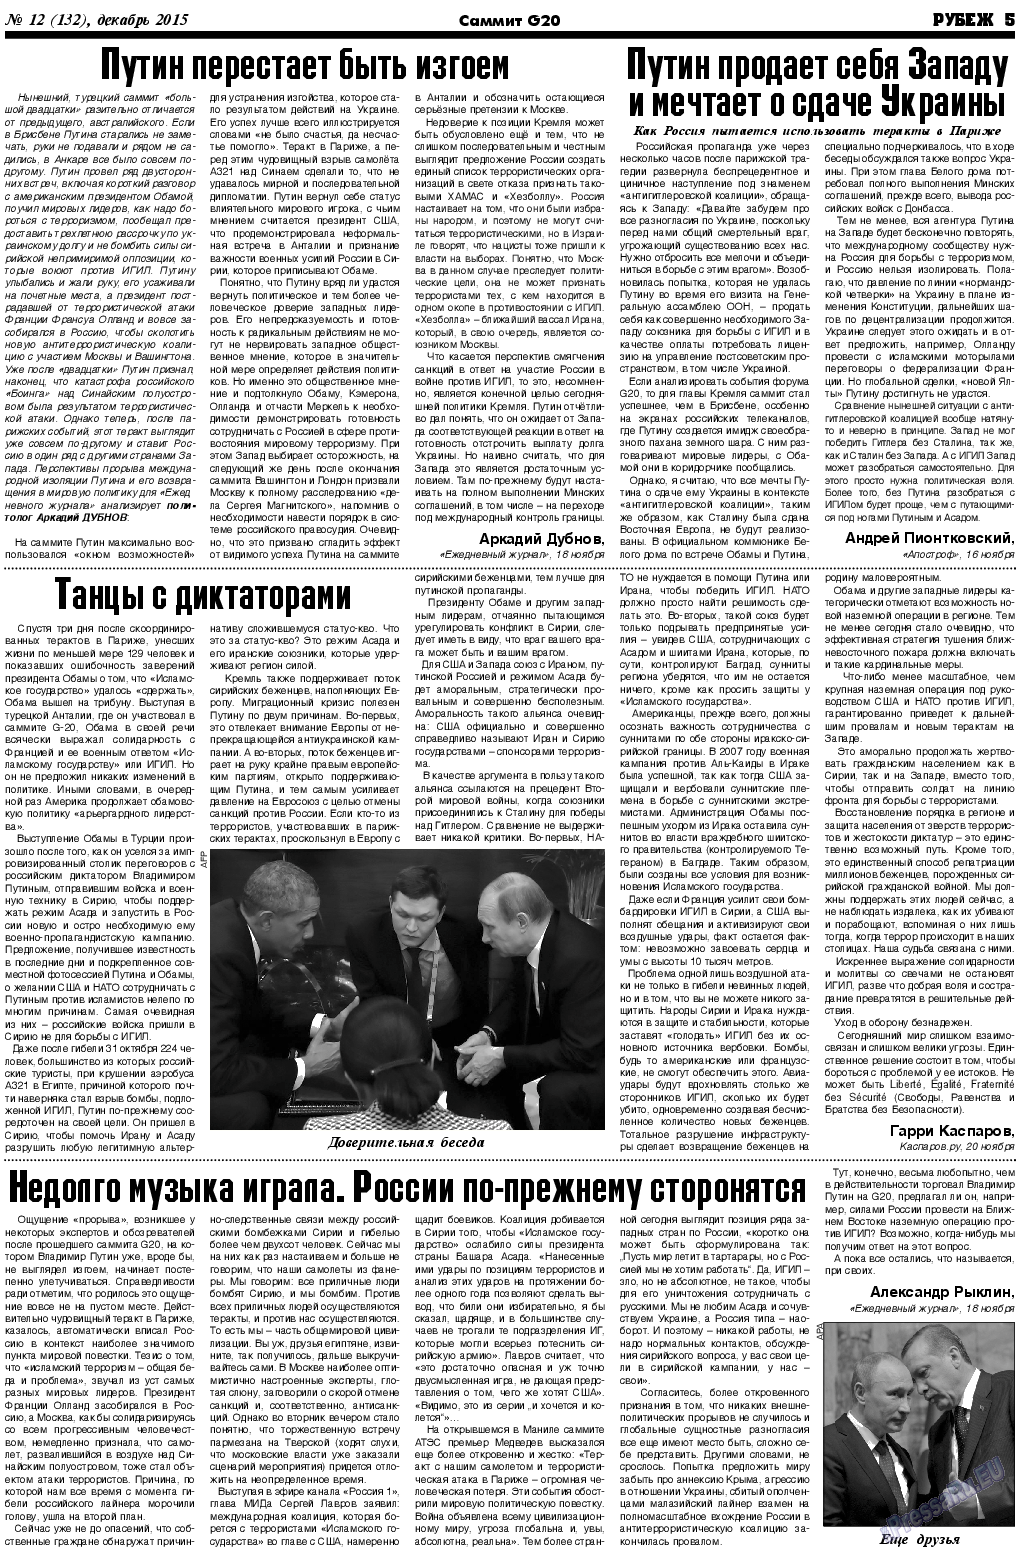 Рубеж, газета. 2015 №12 стр.5